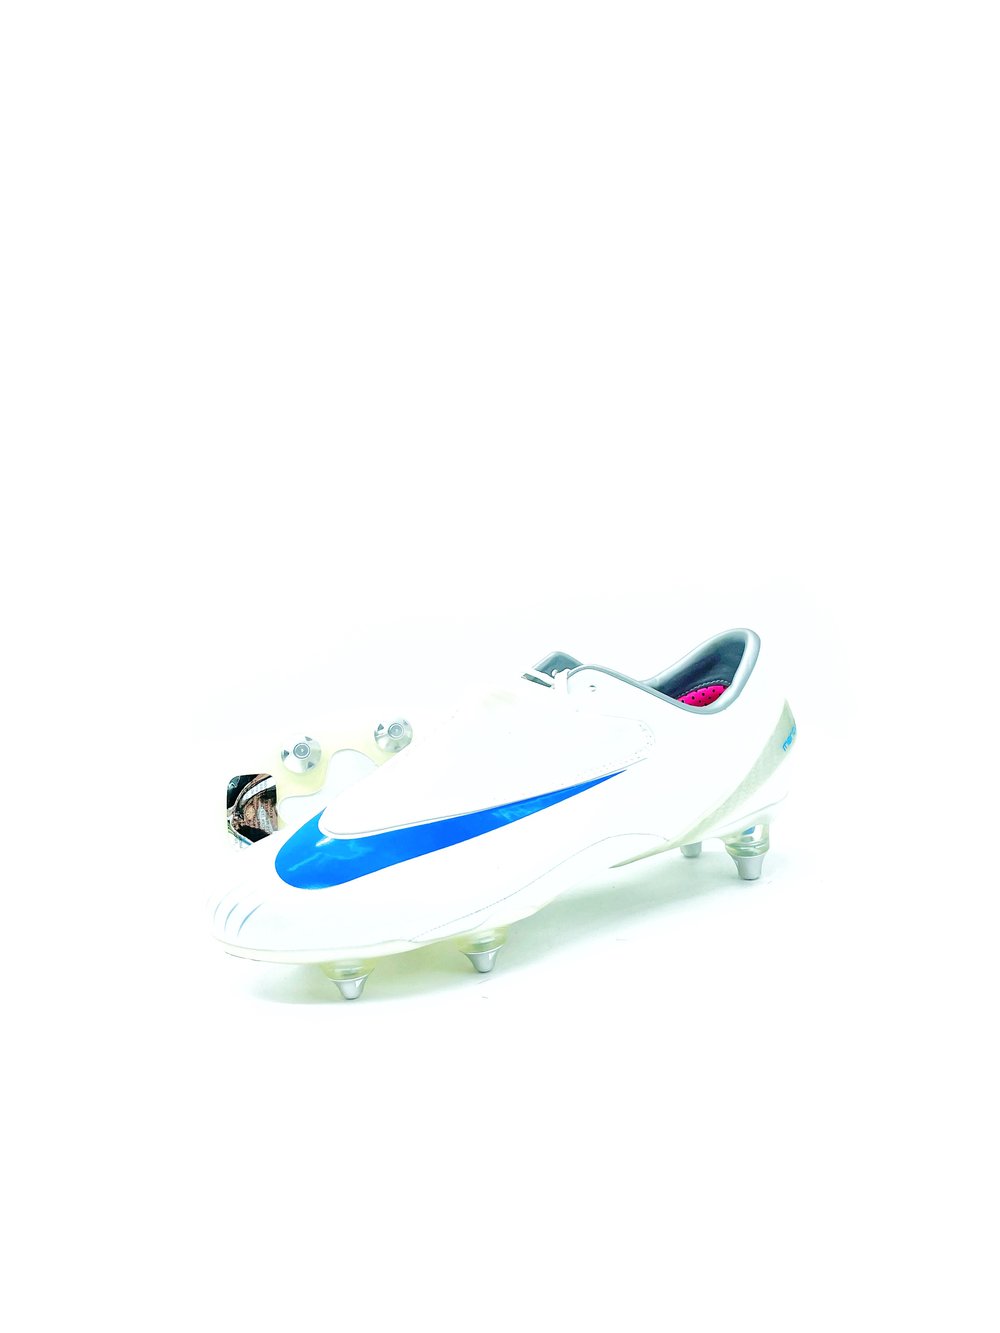 Image of Nike Vapor IV SG white 